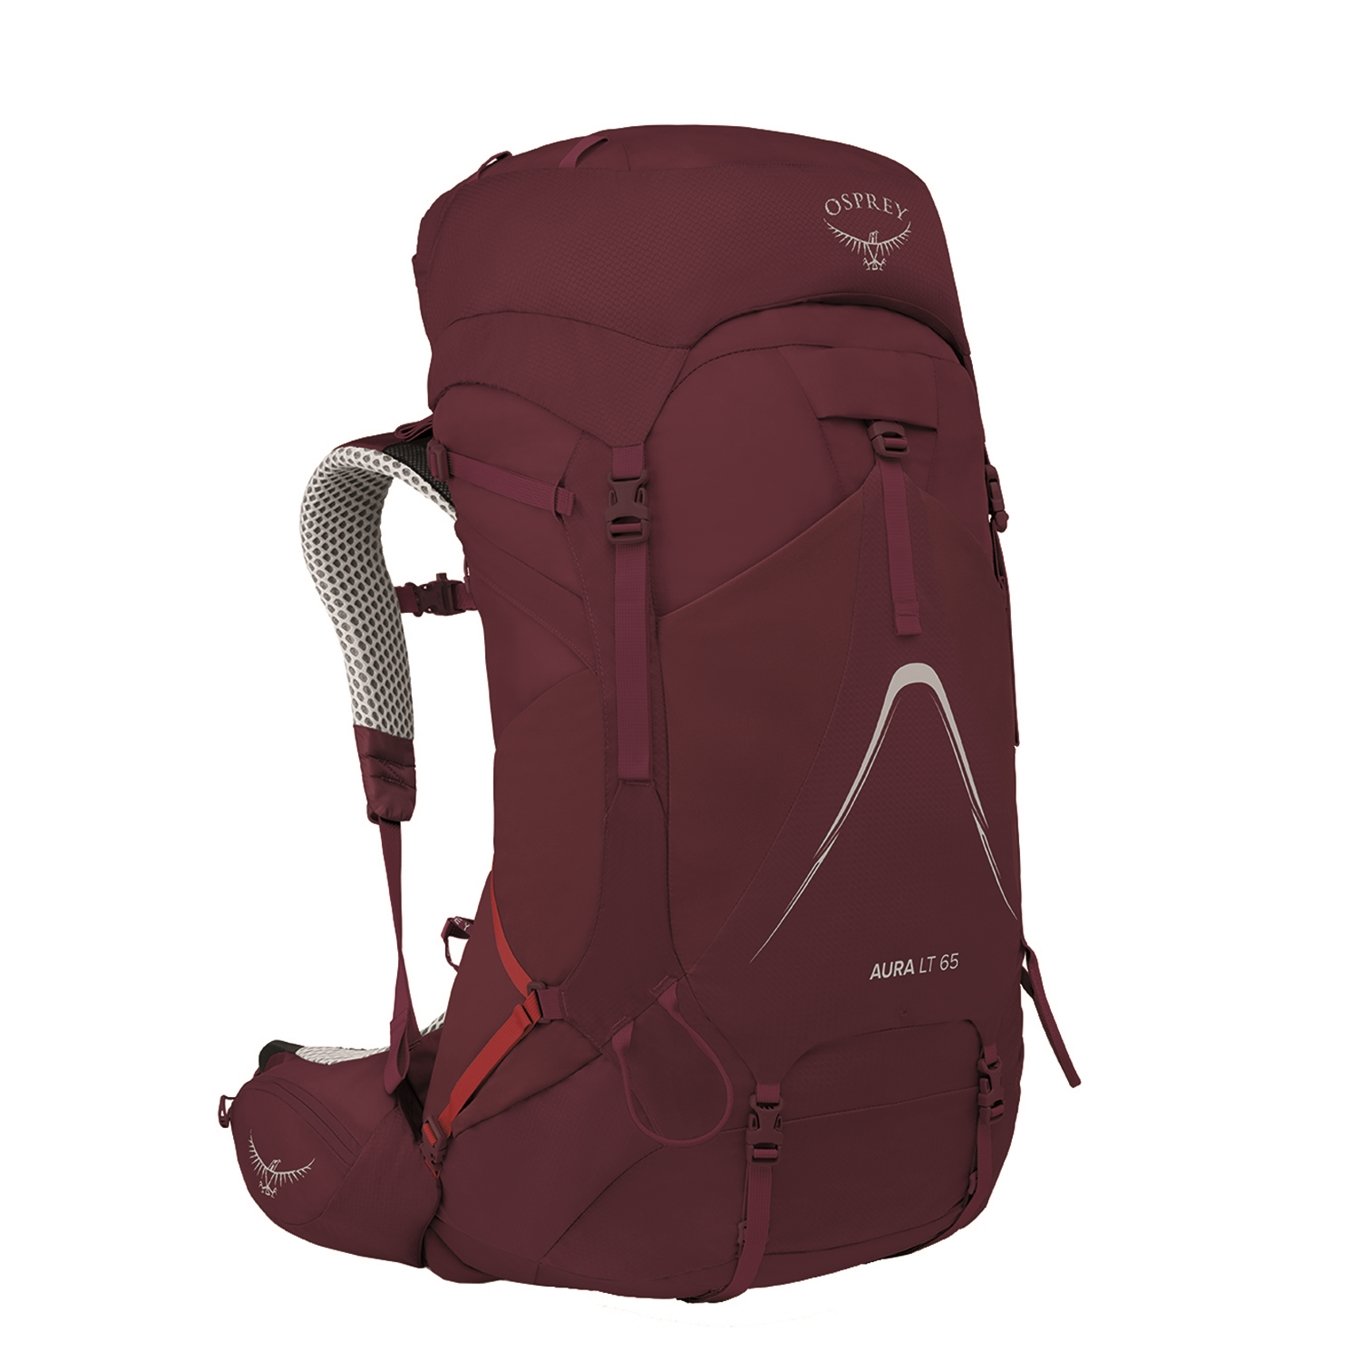 Osprey Aura AG LT 65 WXS/S antidote purple backpack